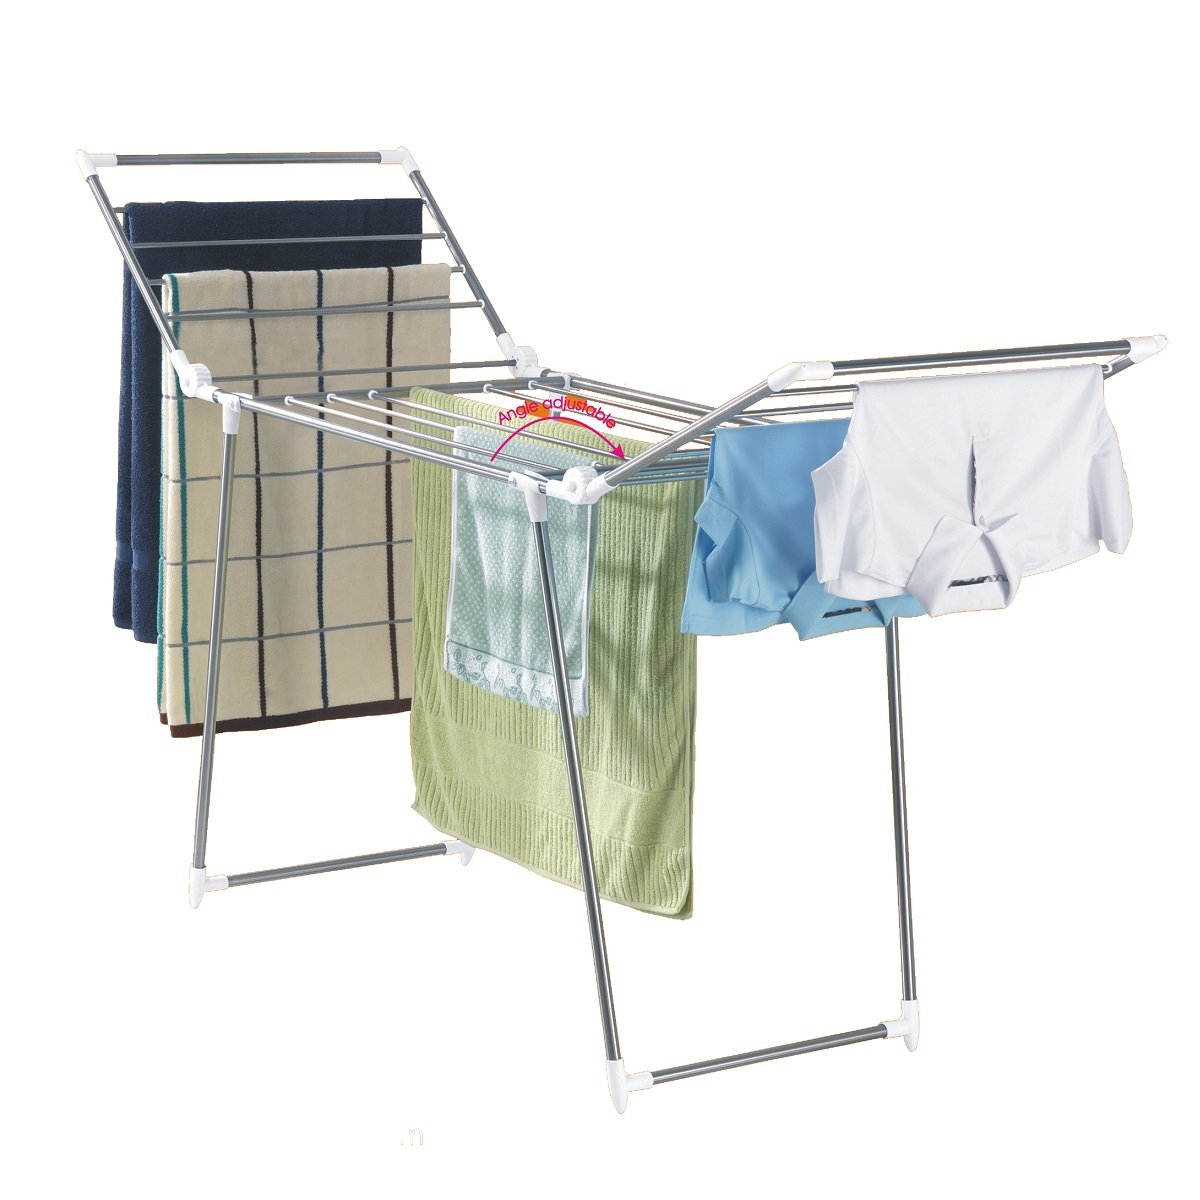 Maxplus Drying Rack w/ Dry Clothes 24Pegs